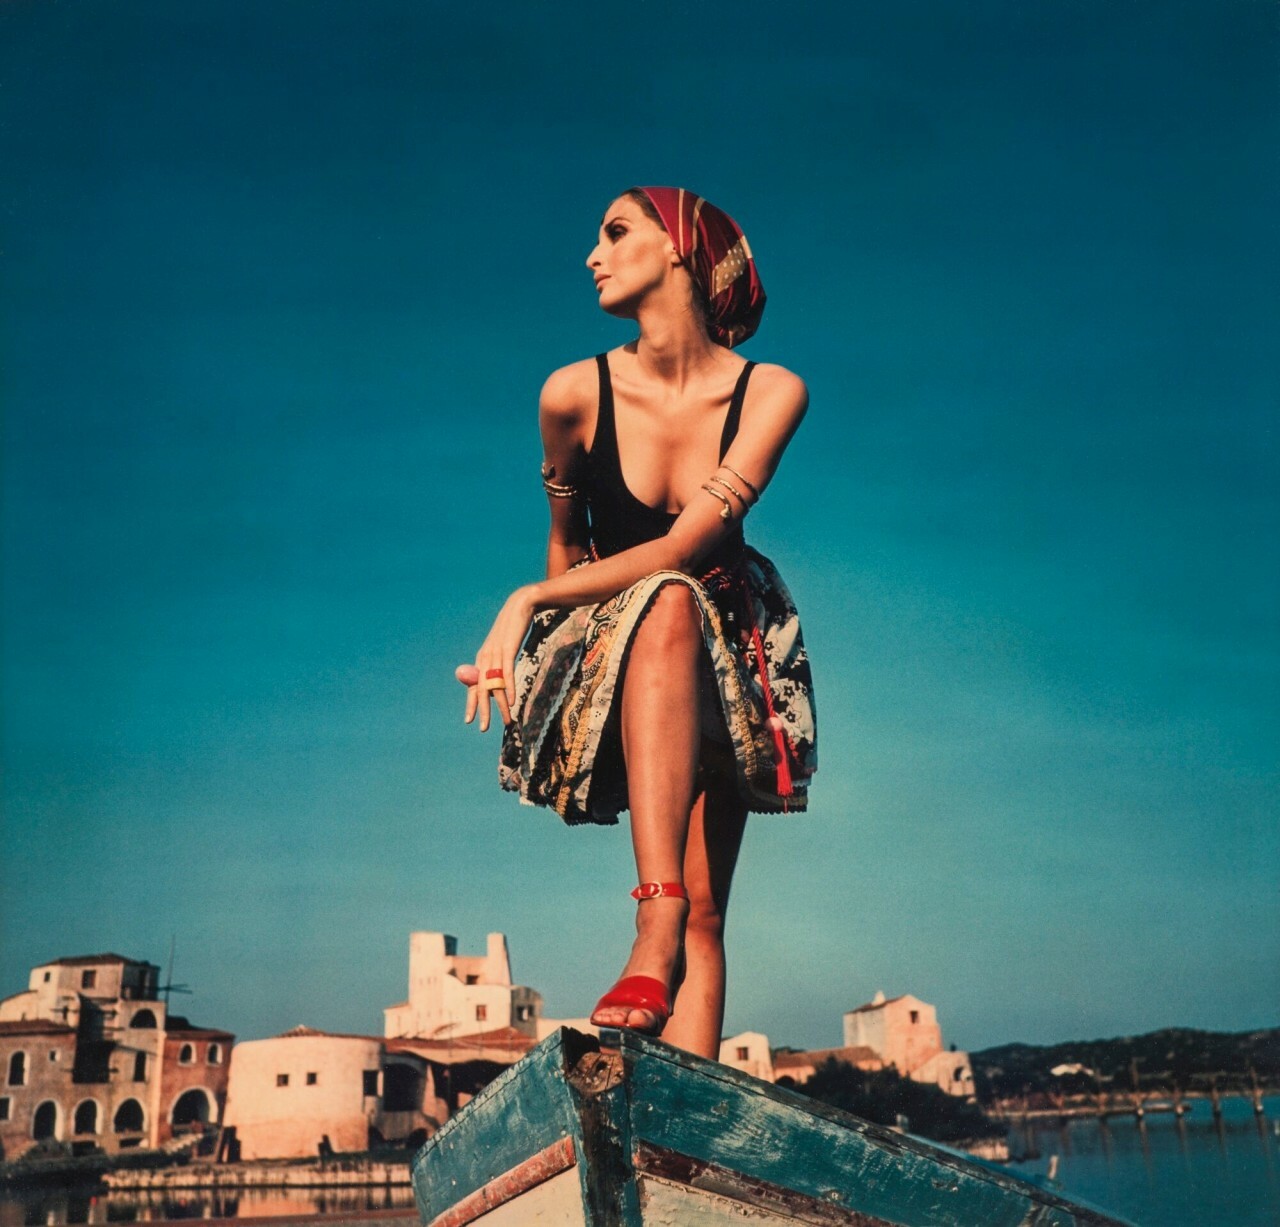 Сардиния, 1969. Фотограф Ормонд Джильи